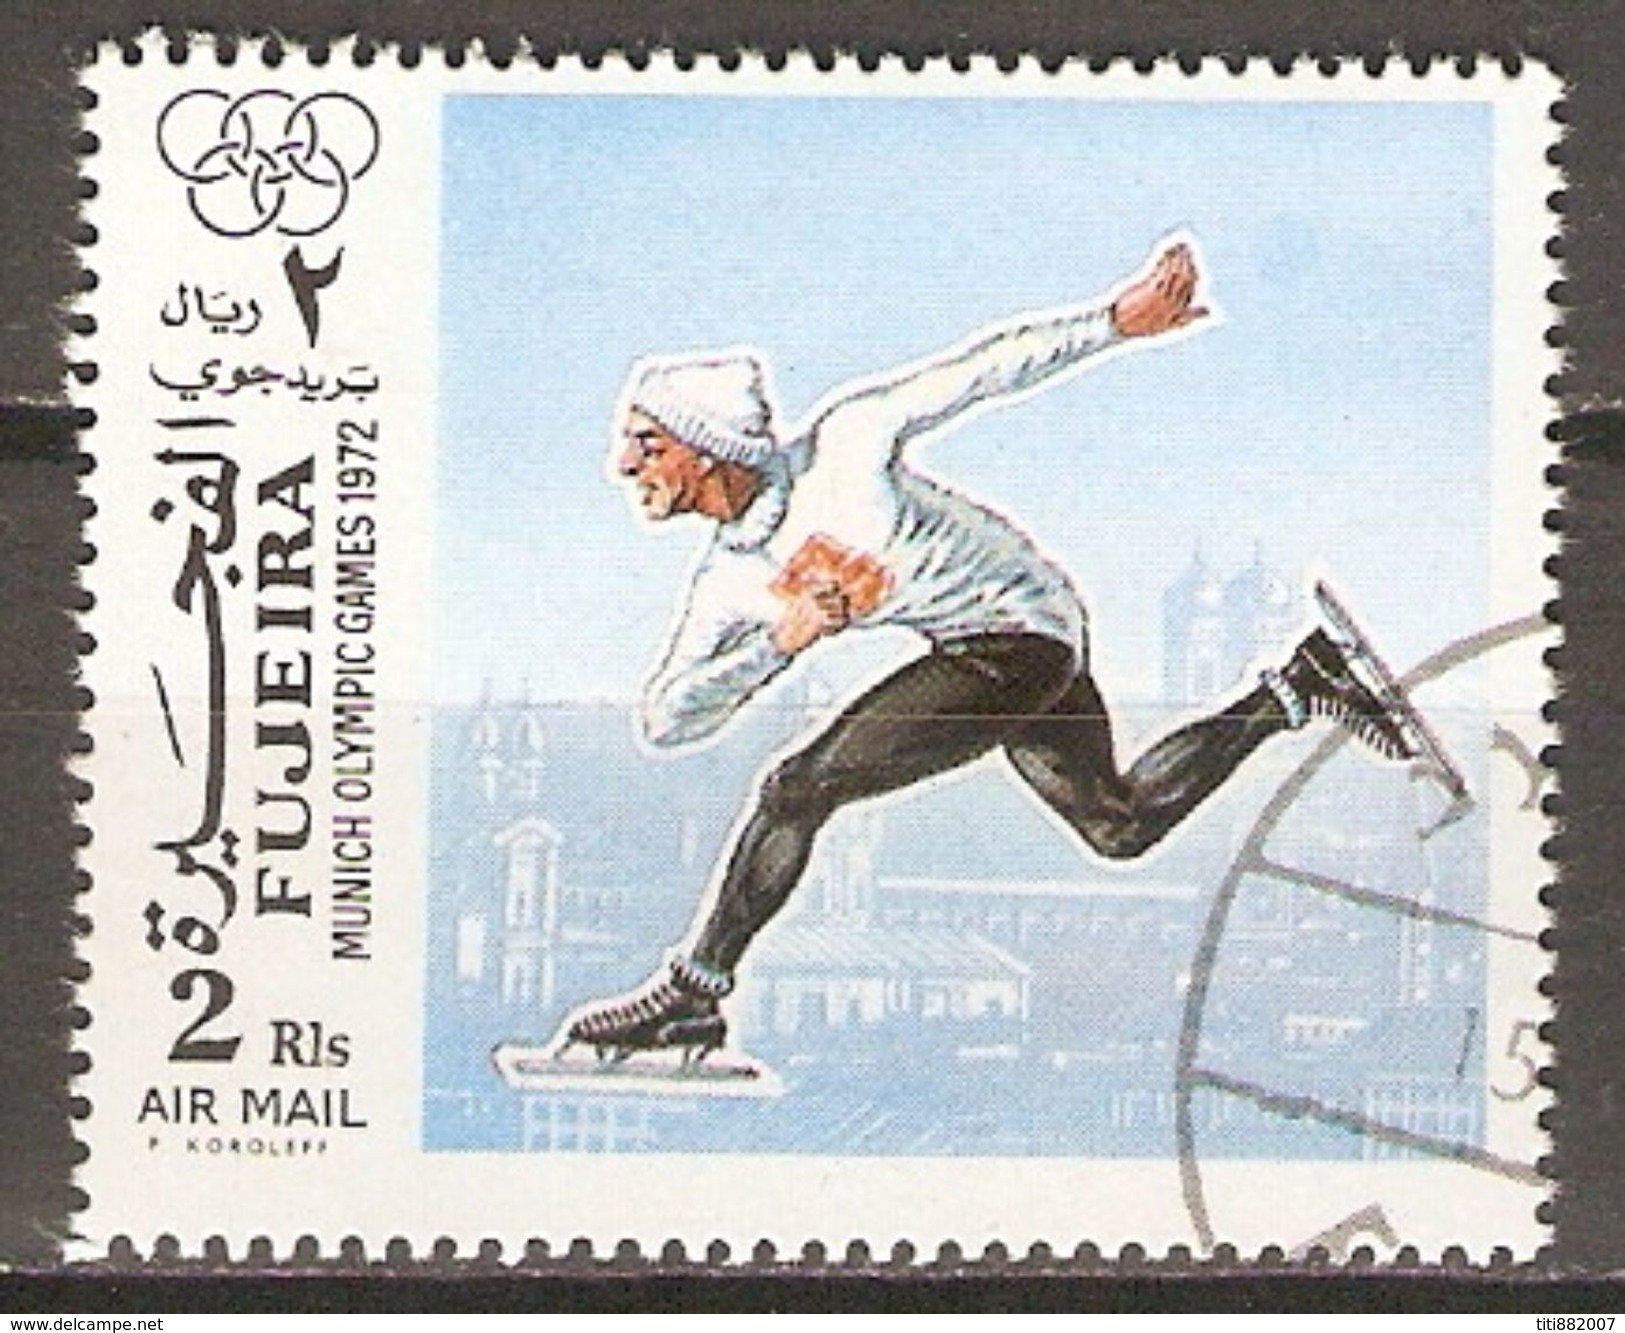 FUJEIRA    -    PATINAGE DE VITESSE      -    Oblitéré - Figure Skating